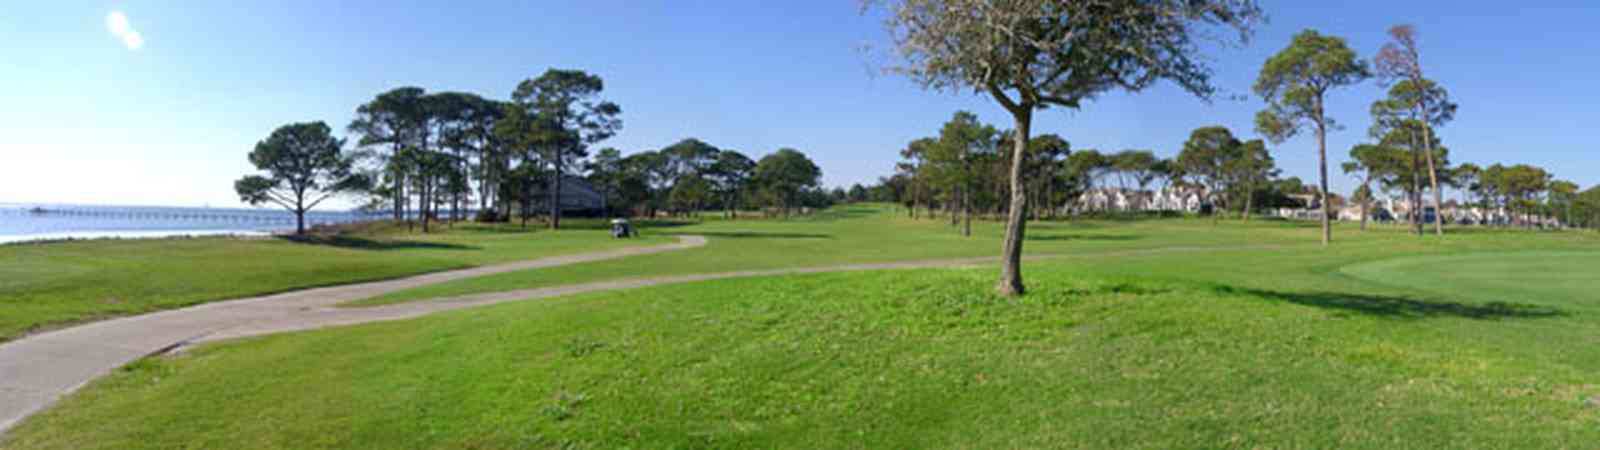 Gulf-Breeze:-Tiger-Point-Golf-Club_09.jpg:  golf course, green, pine trees, santa rosa sound, golfer, caddie